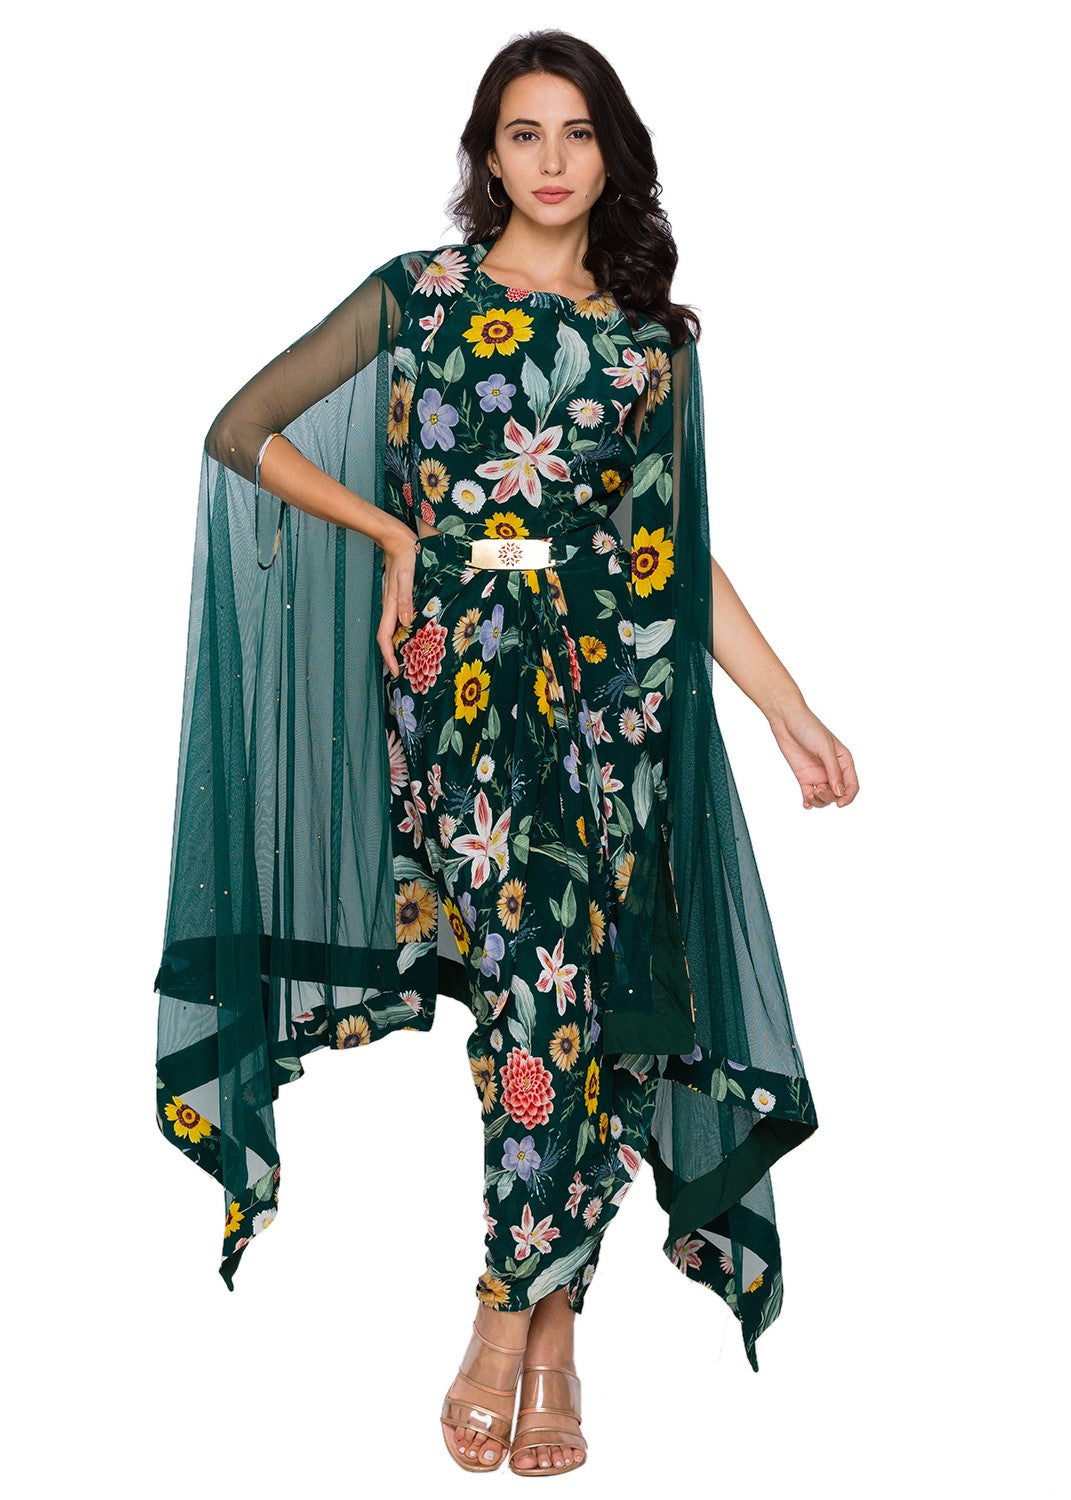 Sougat Paul Bottle Green Drape Dress With Cape modern fusion indian designer wear online shopping melange singapore